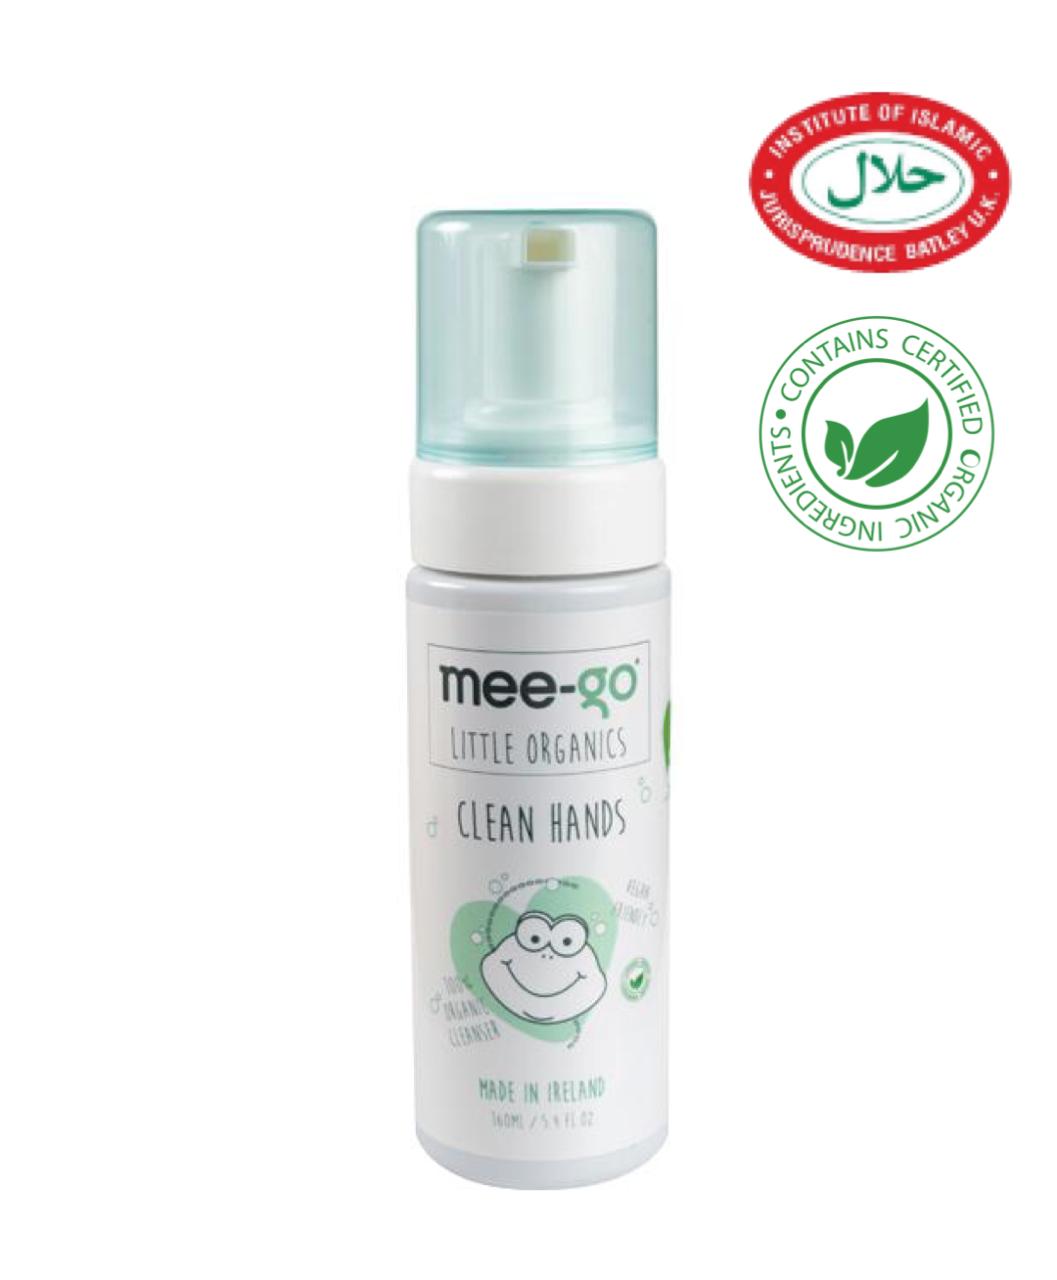 Mee-go Little Organics Clean Hands Halal Sanitizing Foam